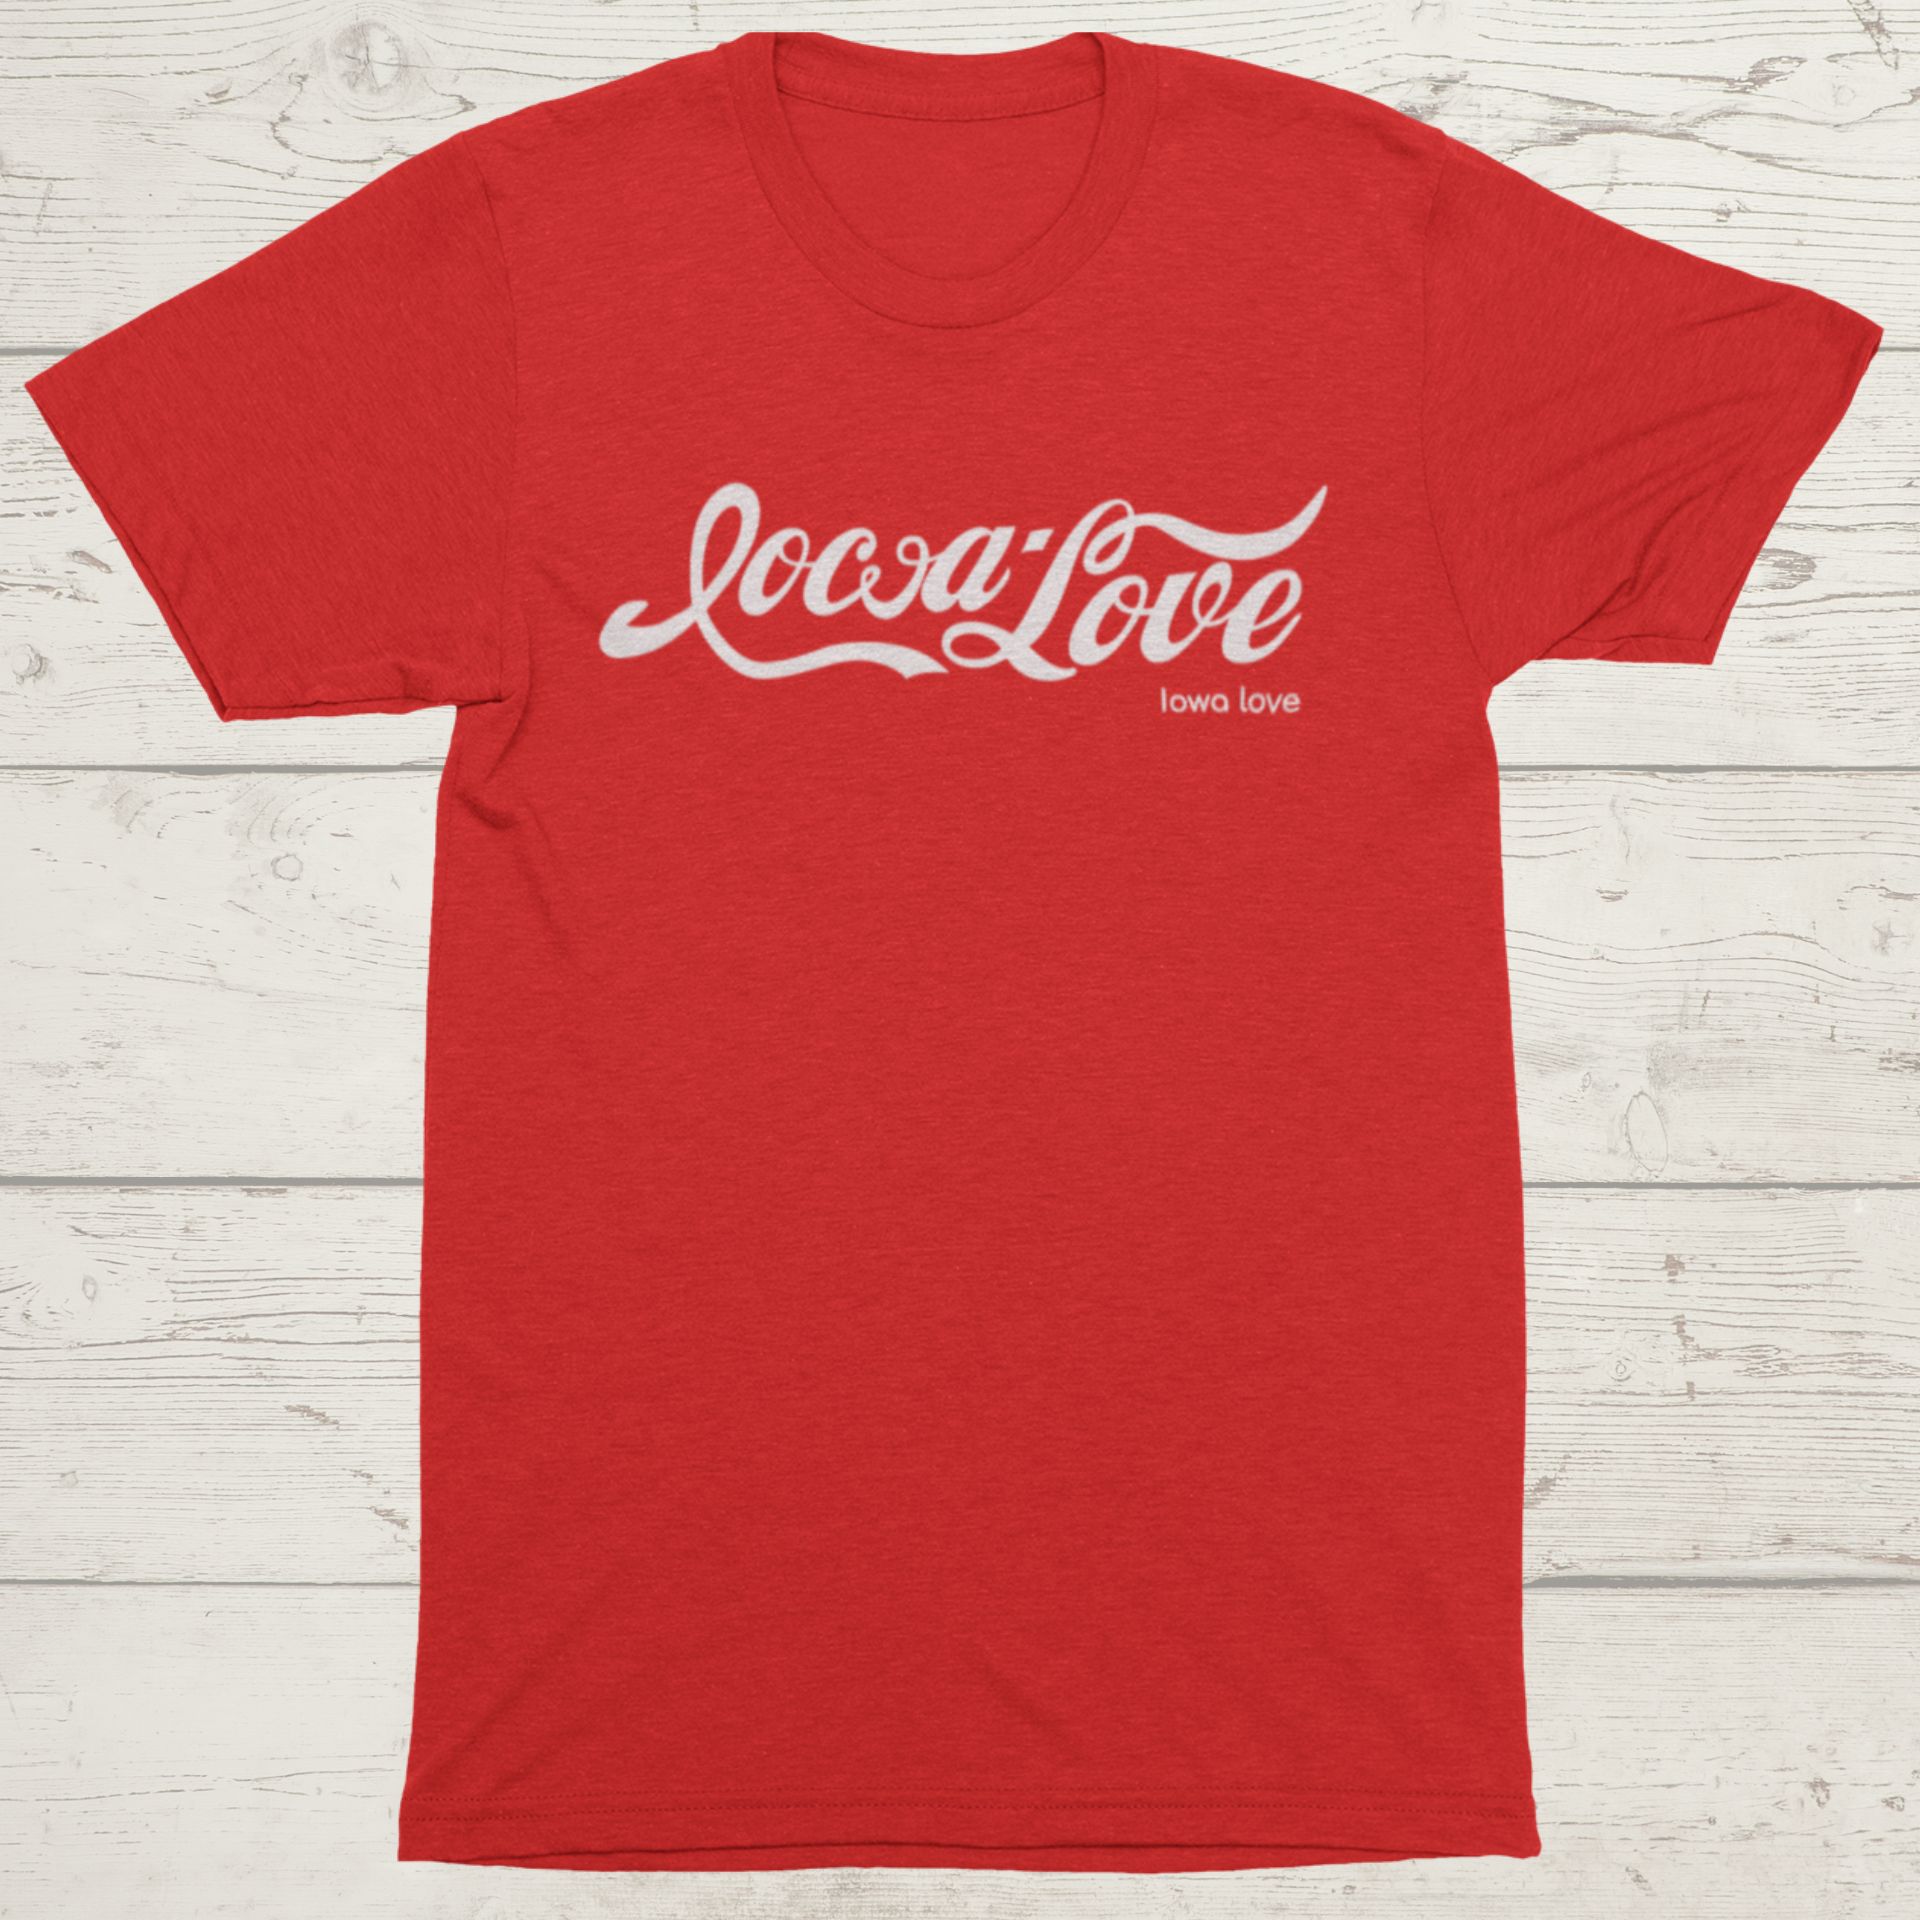 "Iowa love" Cola Inspired Script T-Shirt